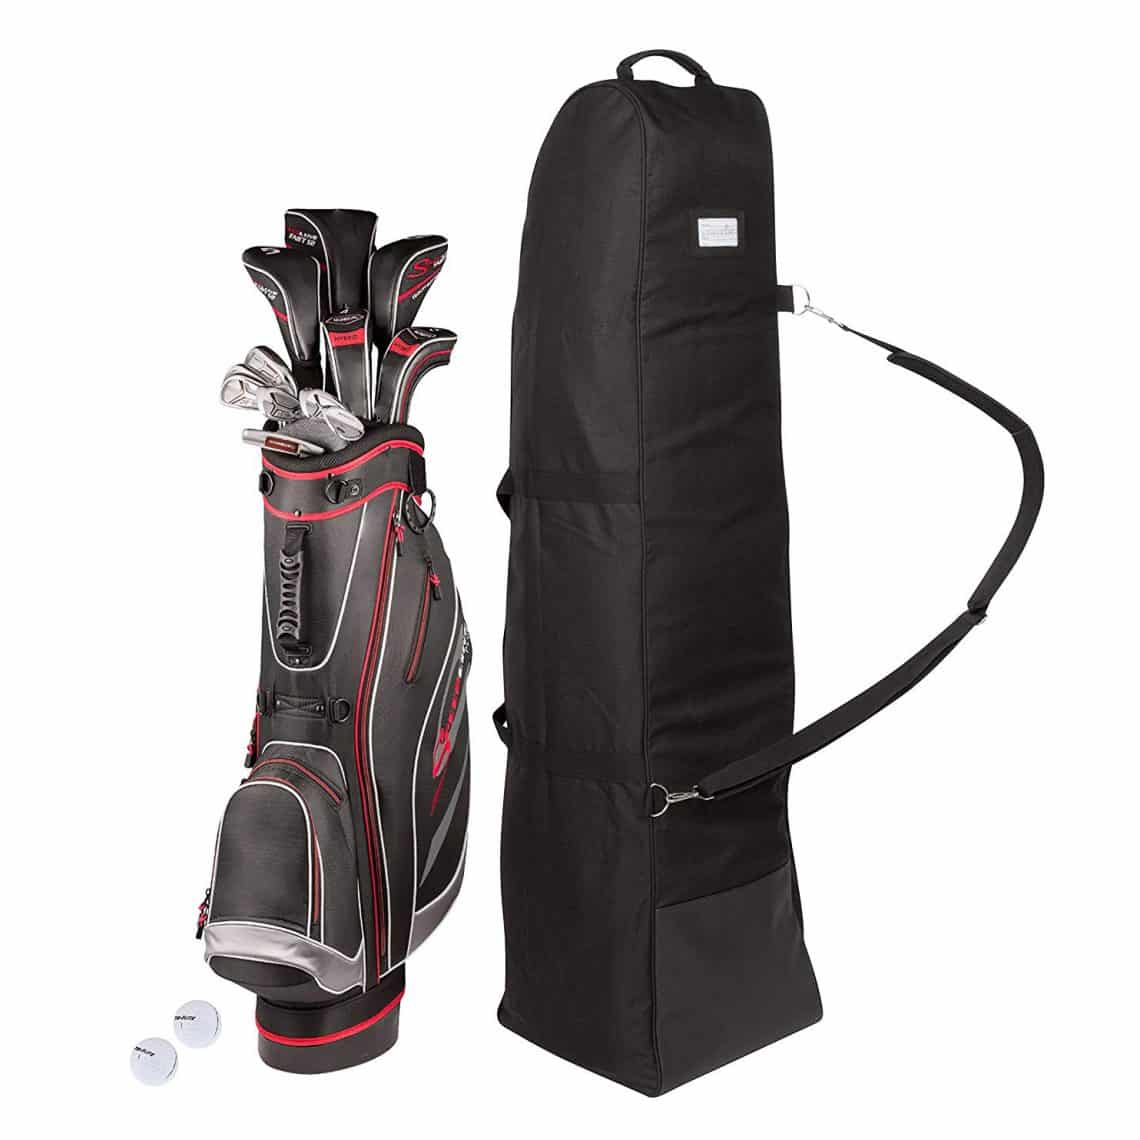 the best travel golf bag